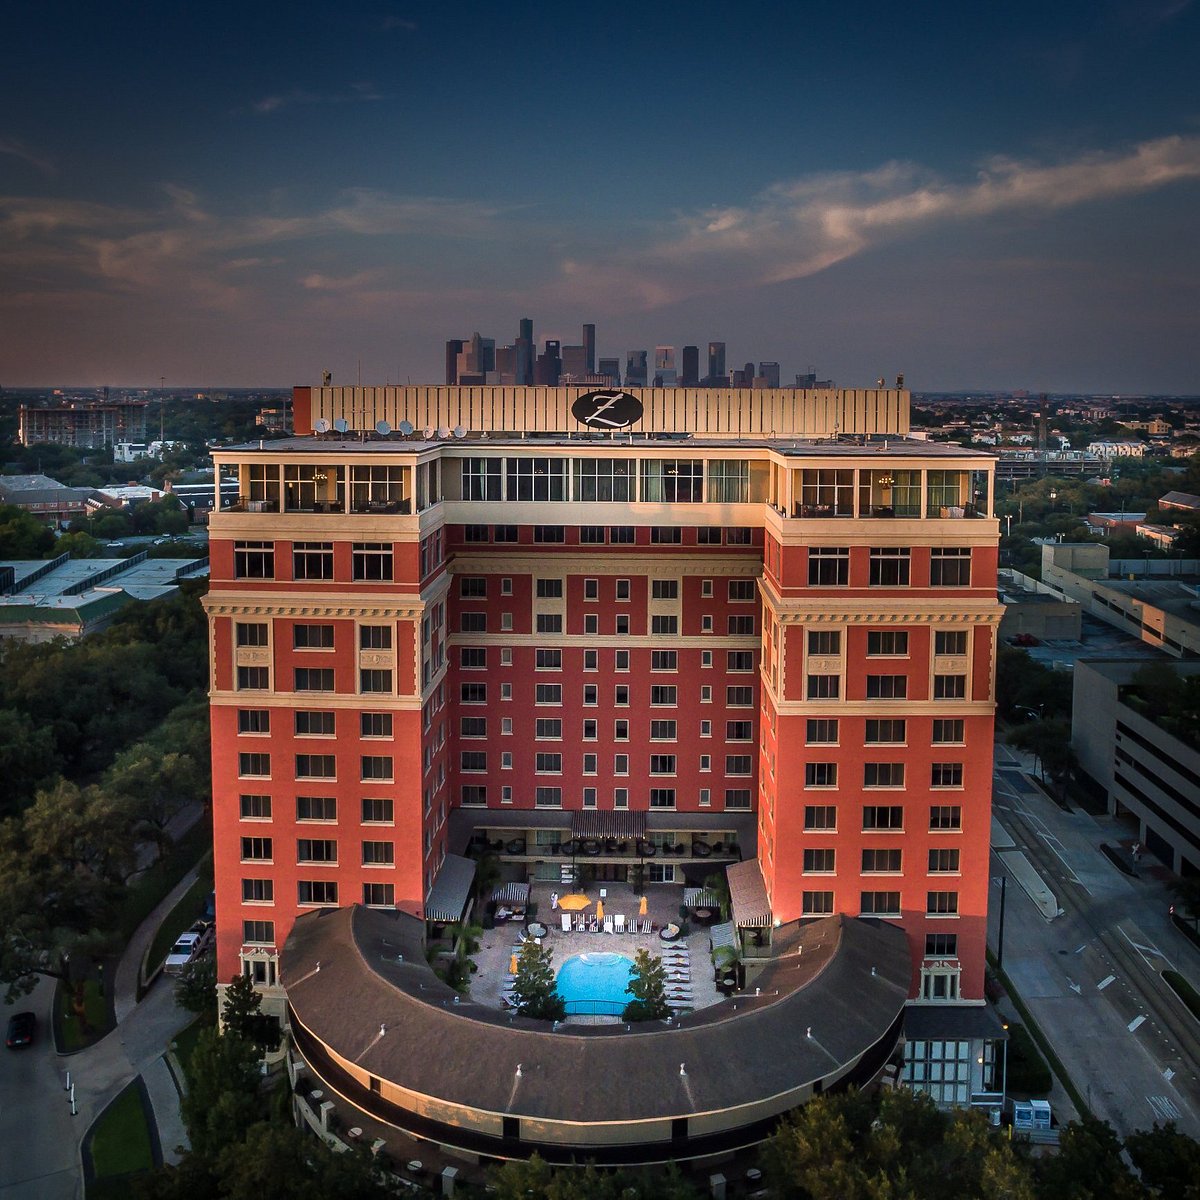 Hotels in Southbelt / Ellington, Houston